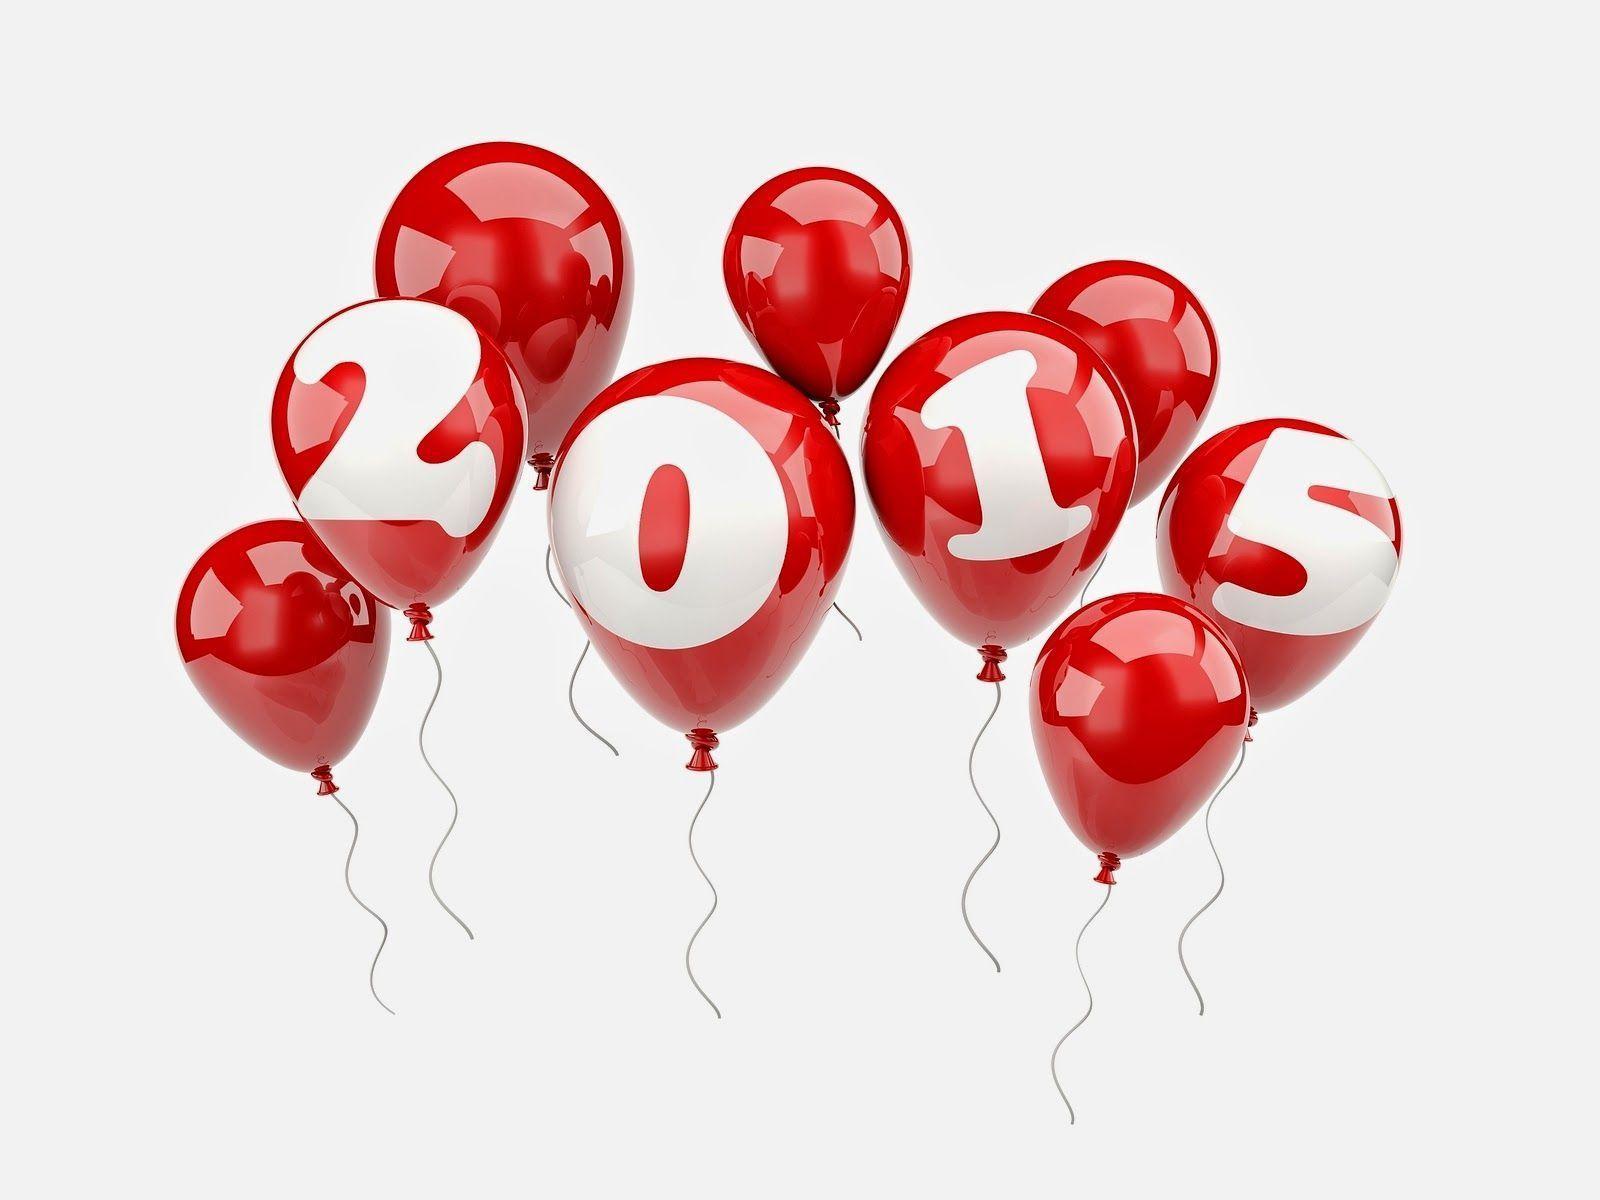 3D Red New Year 2015 Balloonshotos